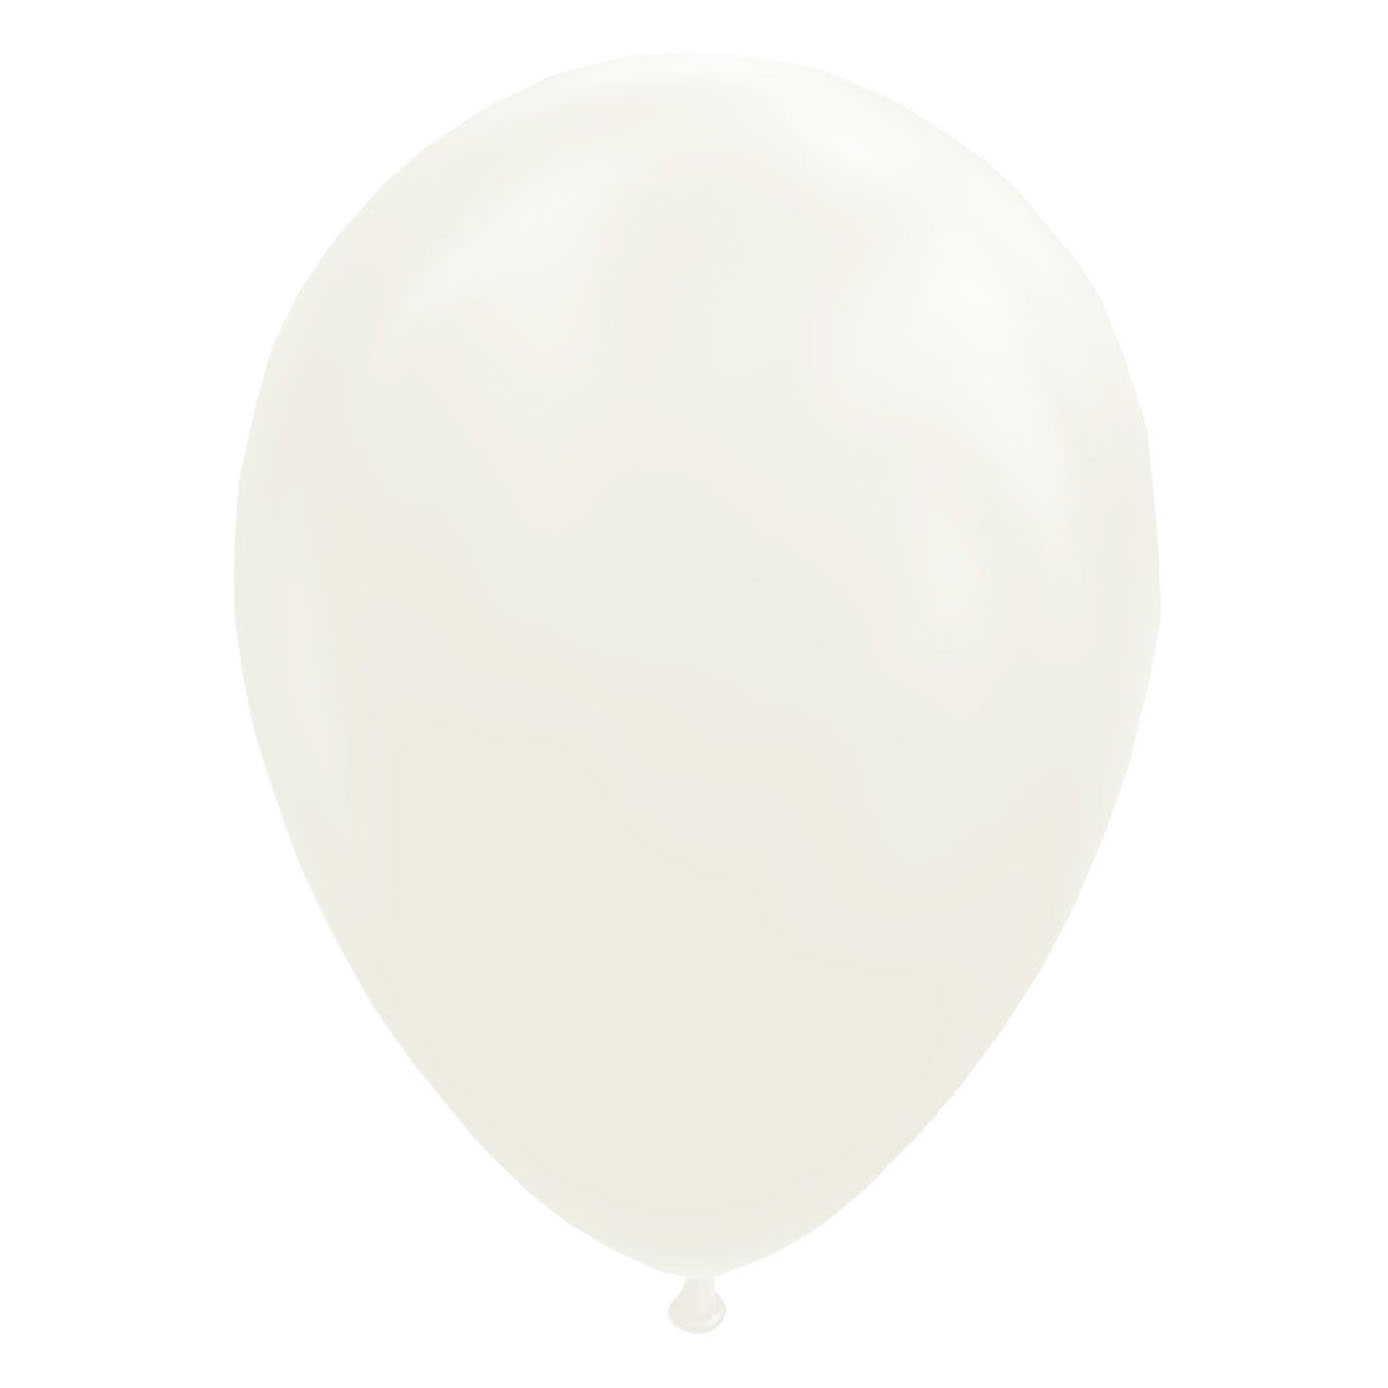 Luftballons Transparent 30cm, 10 Stk.